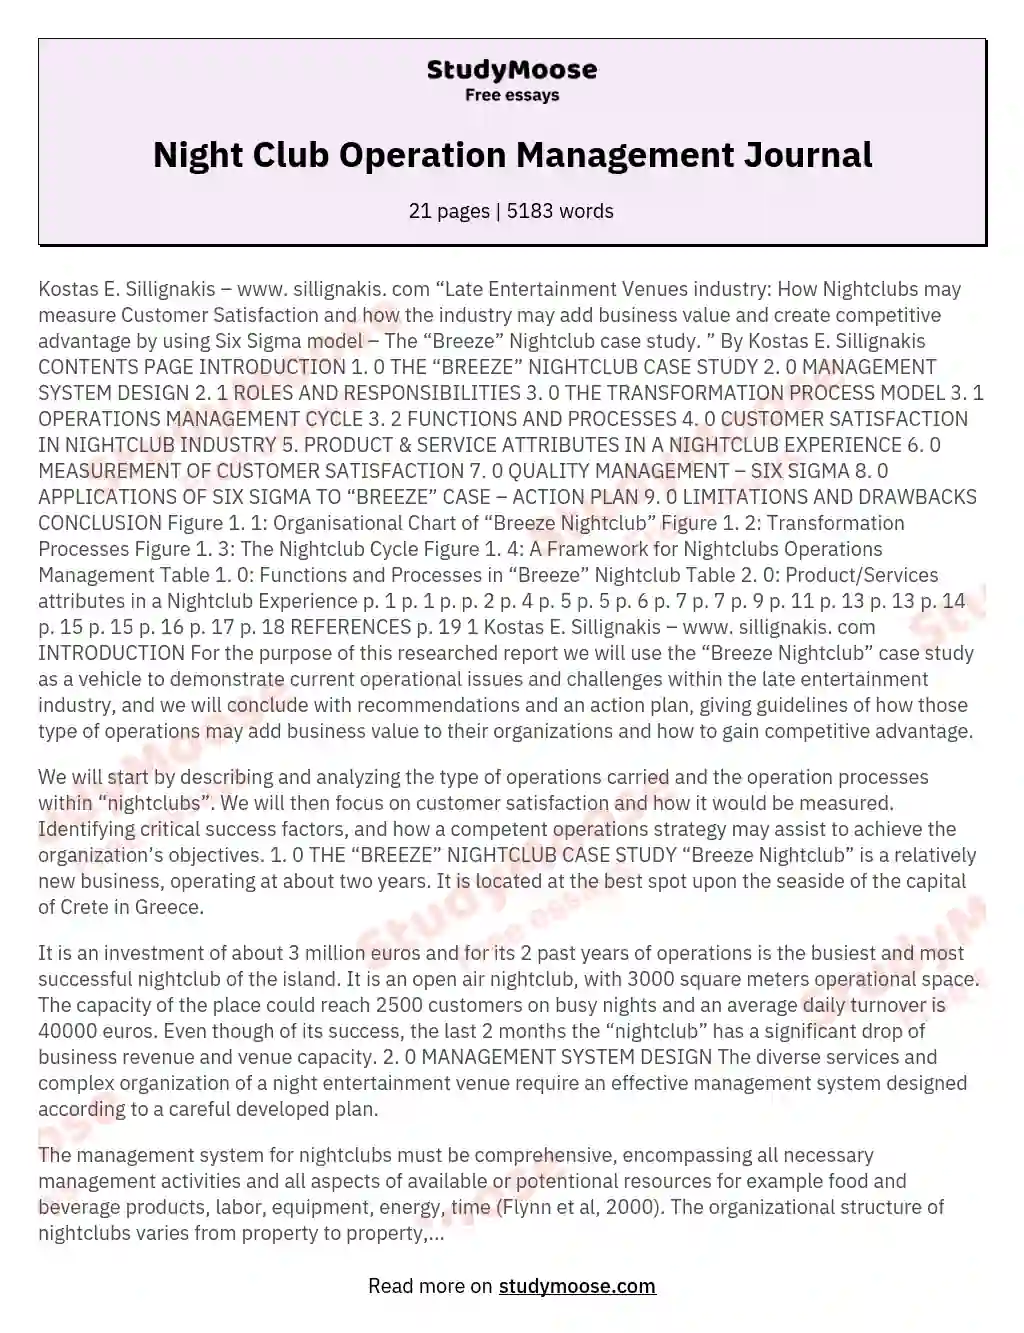 Night Club Operation Management Journal essay